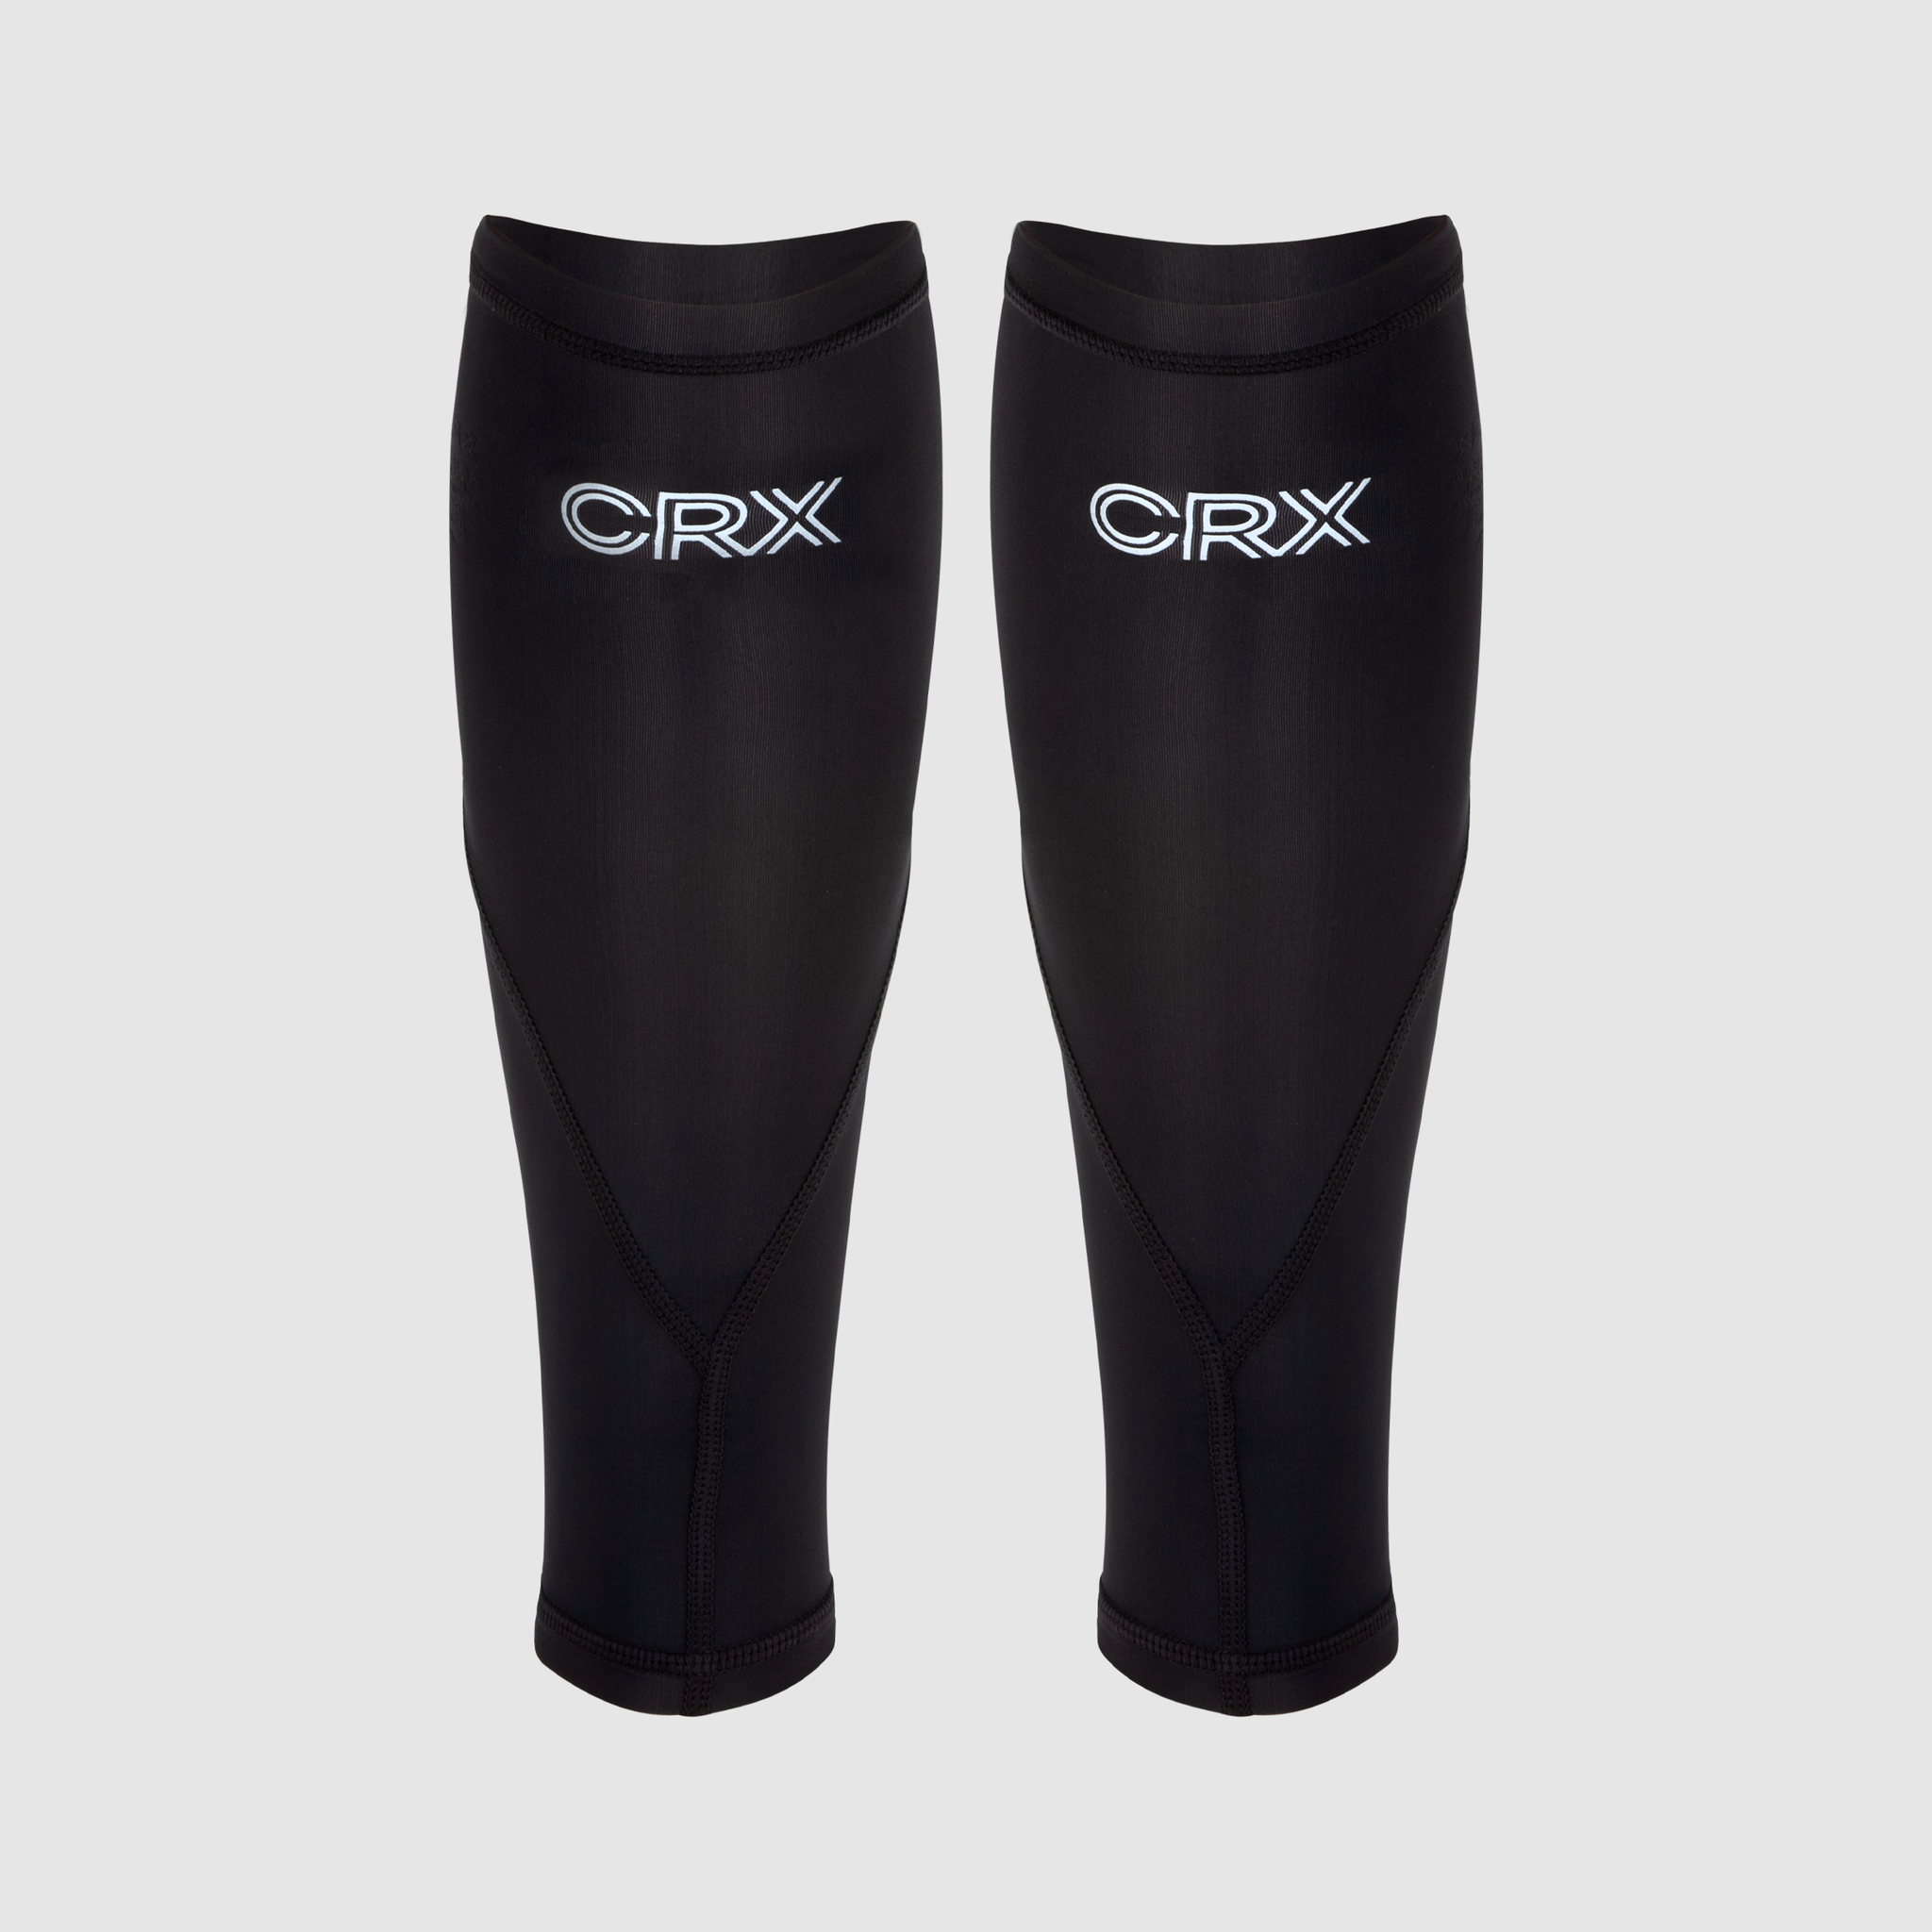 CRX Black Elite Compression Calf Sleeves – VX3